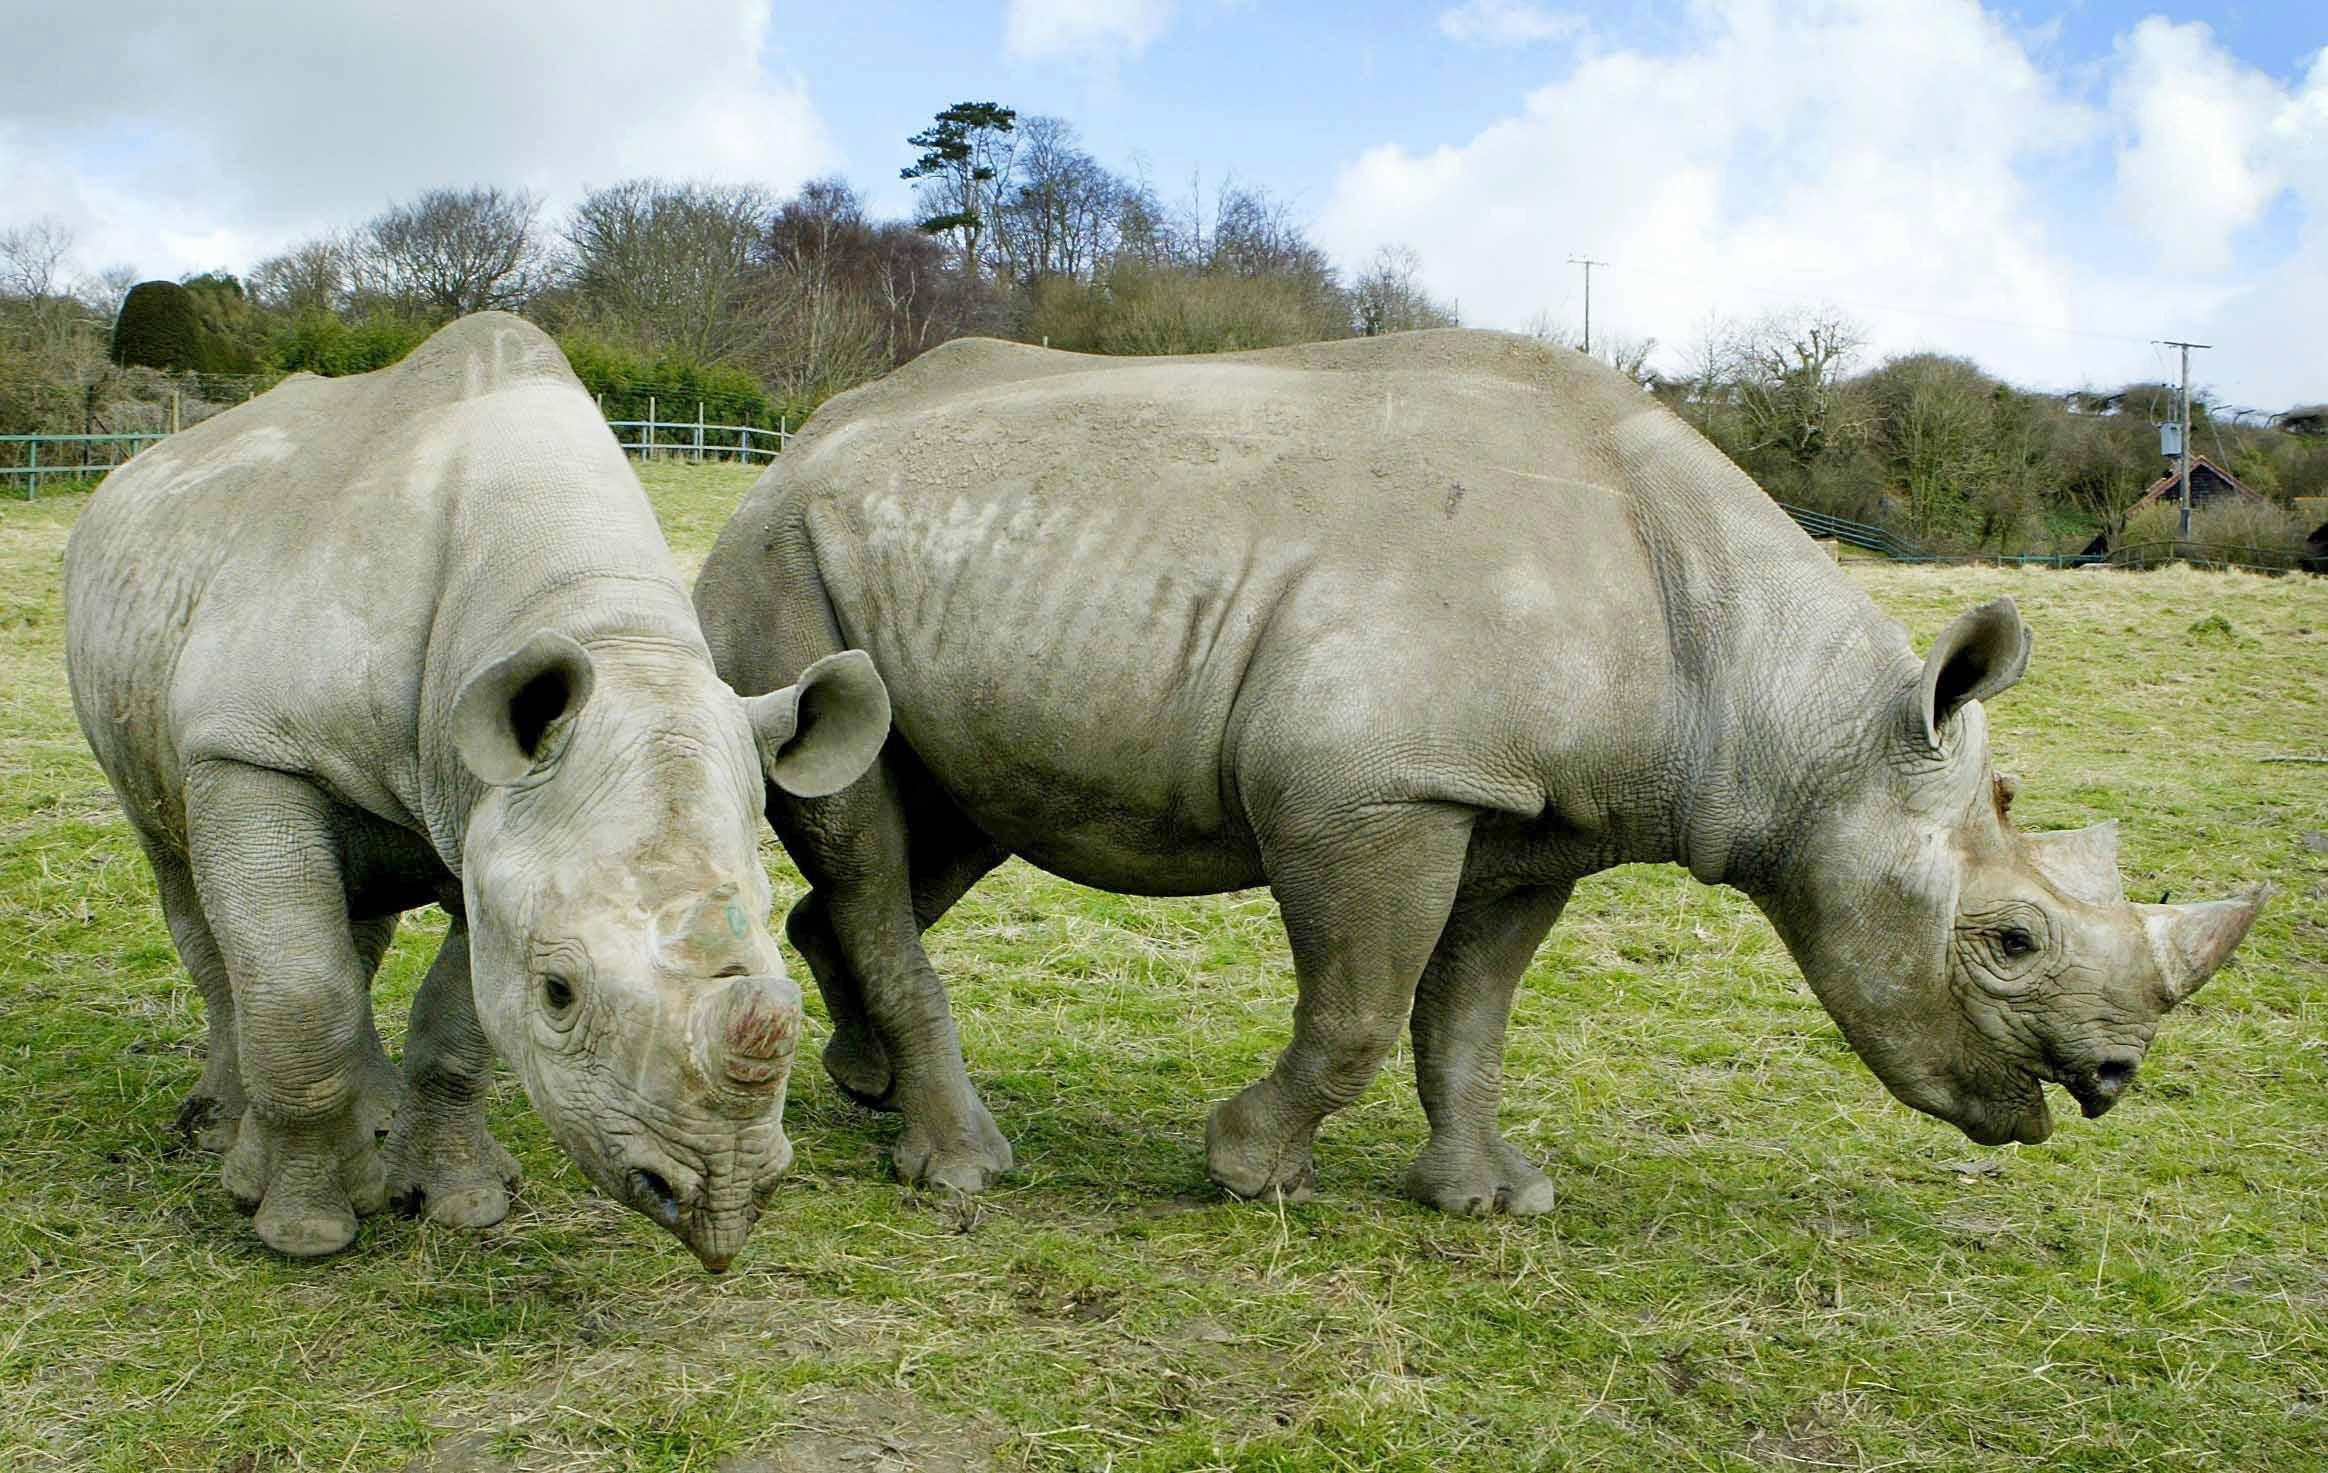 white rhinoceros population increasing